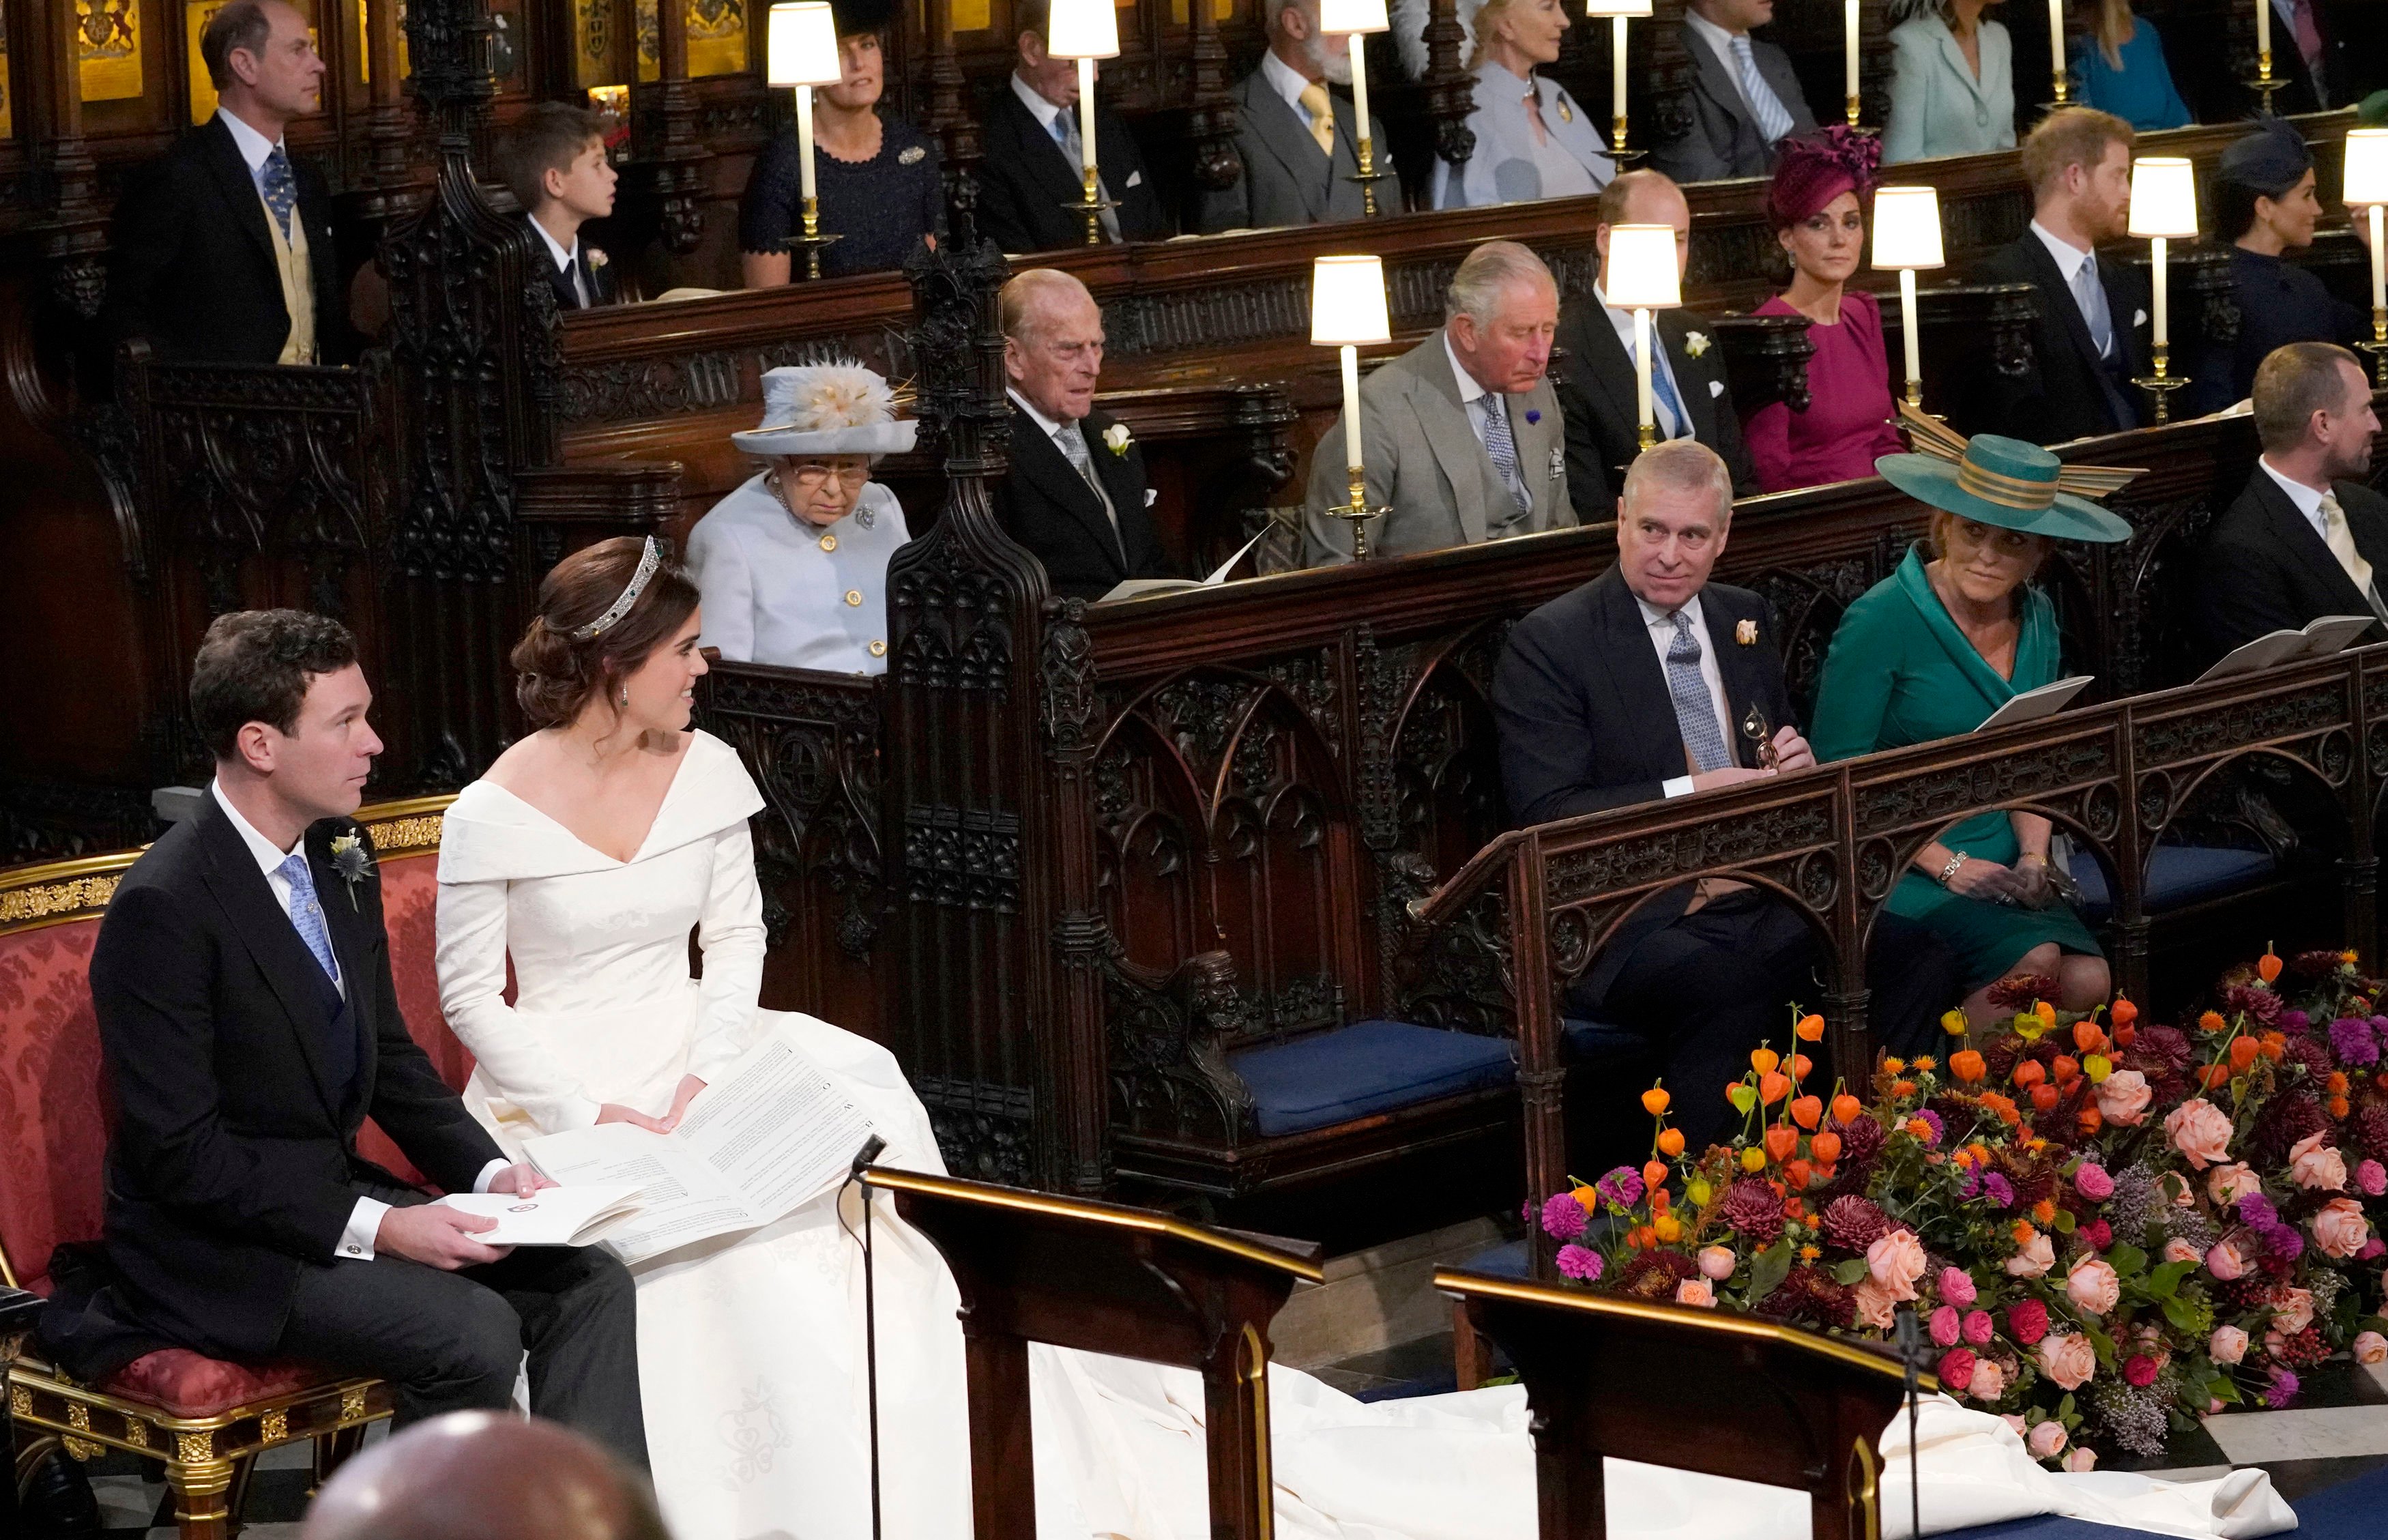 Princess Eugenie and Jack Brooksbank look towards Prince Andrew and Sarah Ferguson during wedding ceremony